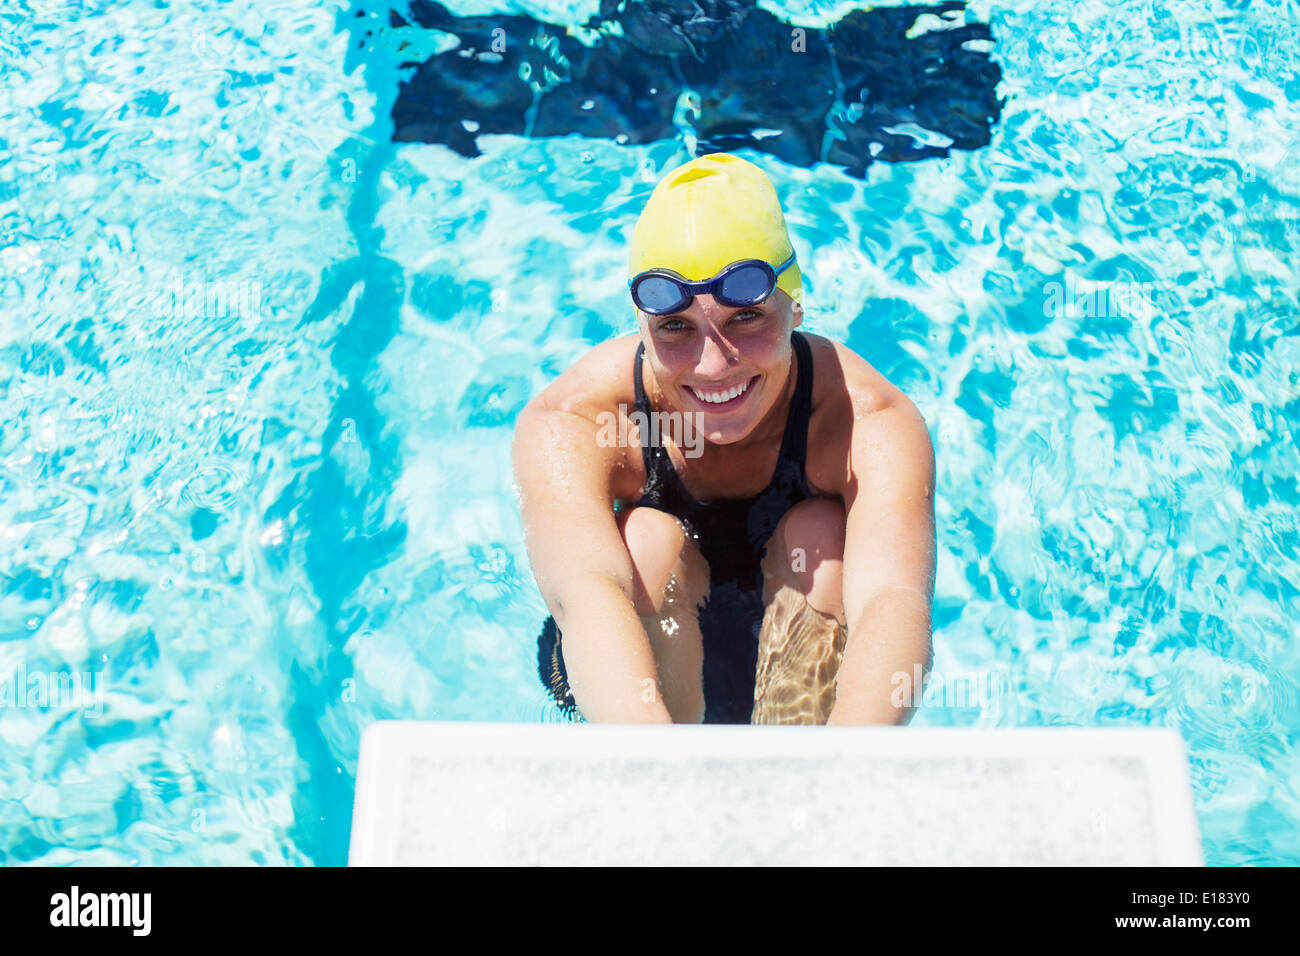 Portrait of smiling swimmer poised at starting block Stock Photo